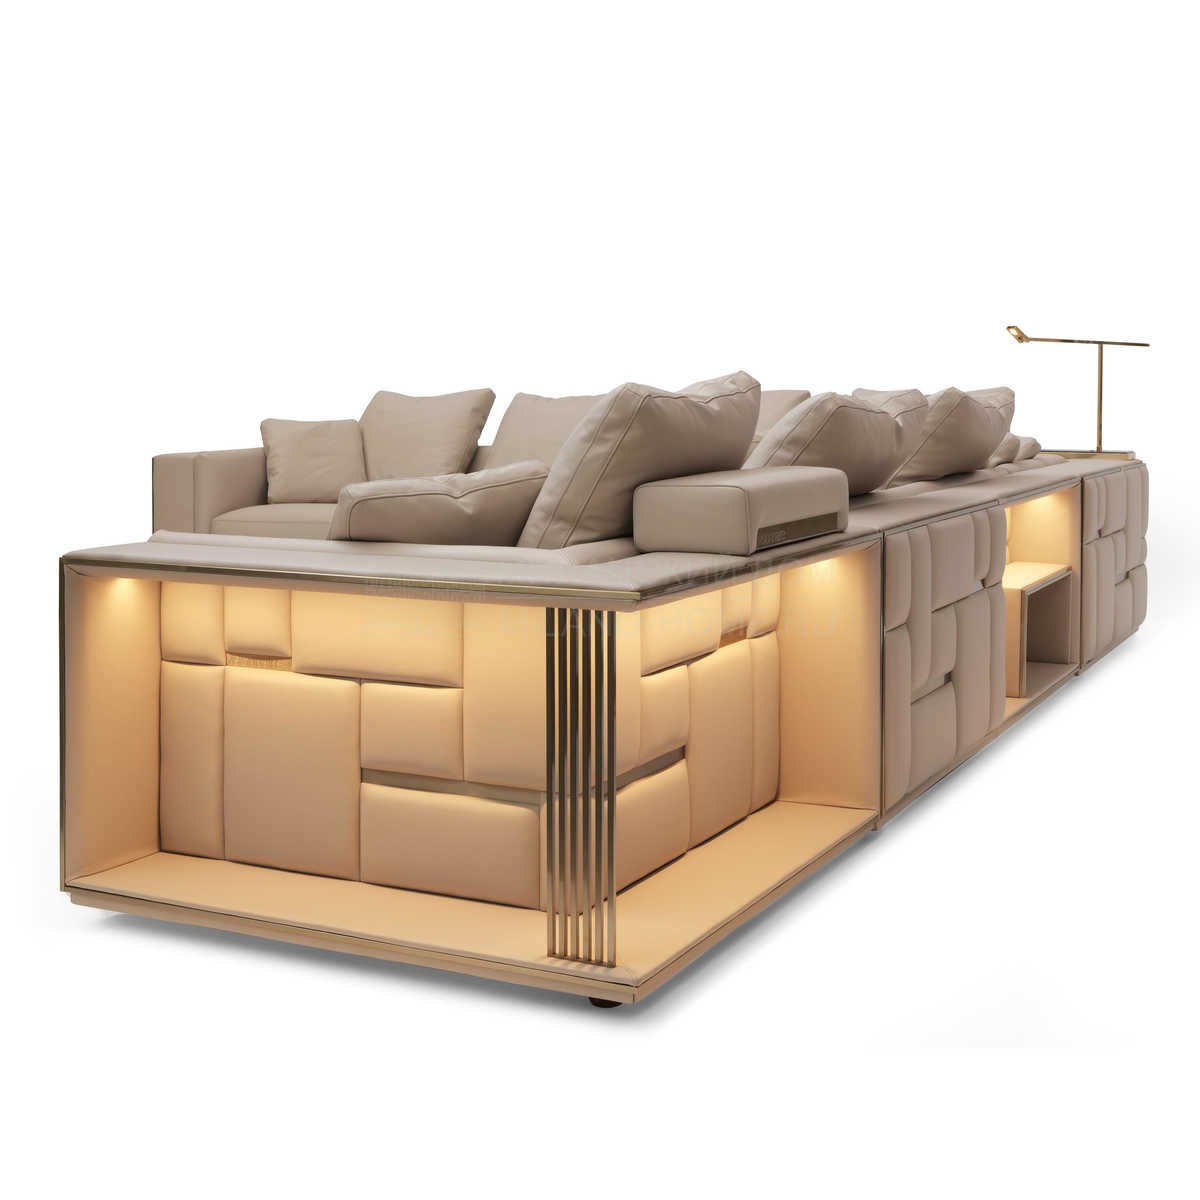 Кожаный диван Babylon rack sofa из Италии фабрики IPE CAVALLI VISIONNAIRE